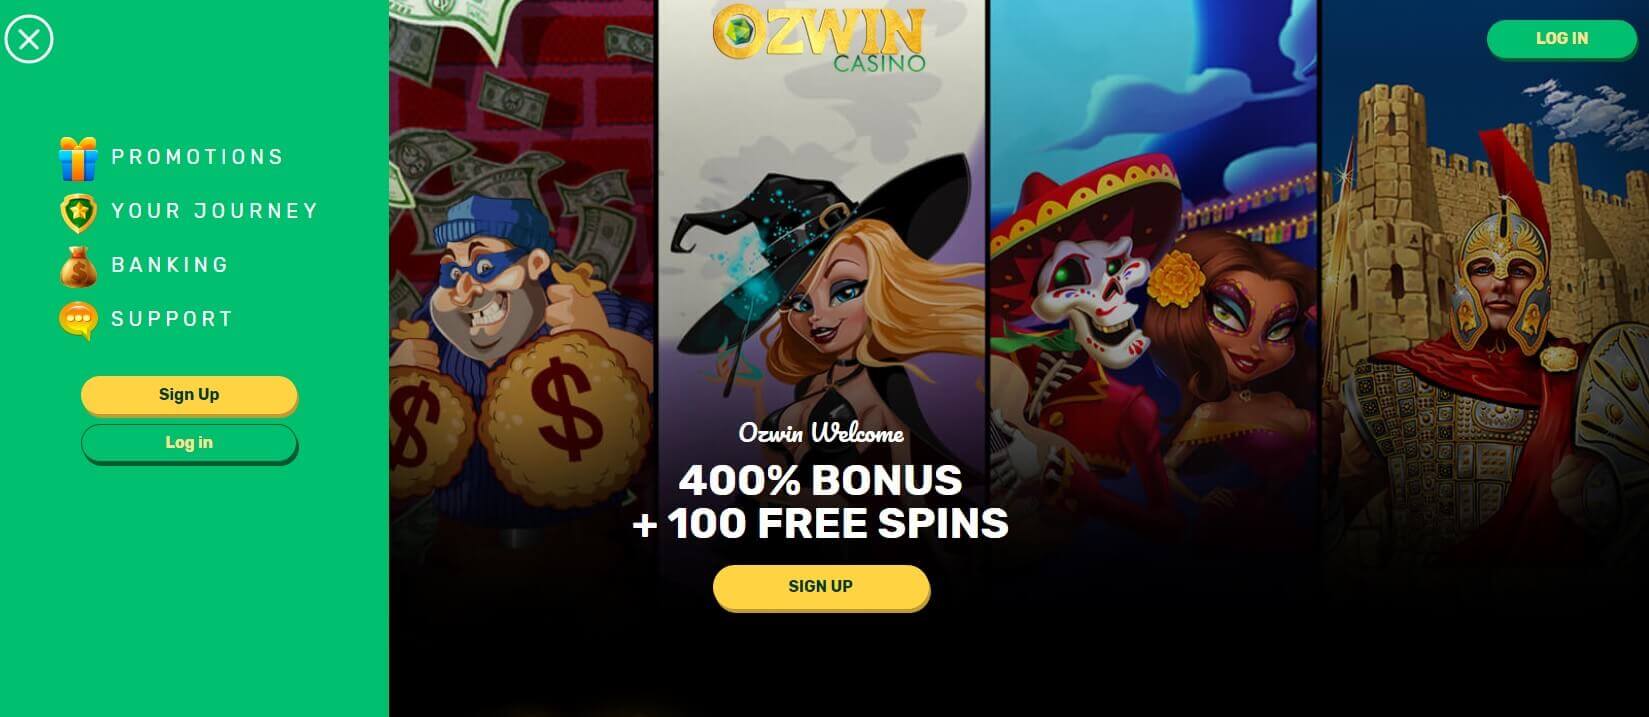 homepage ozwin casino